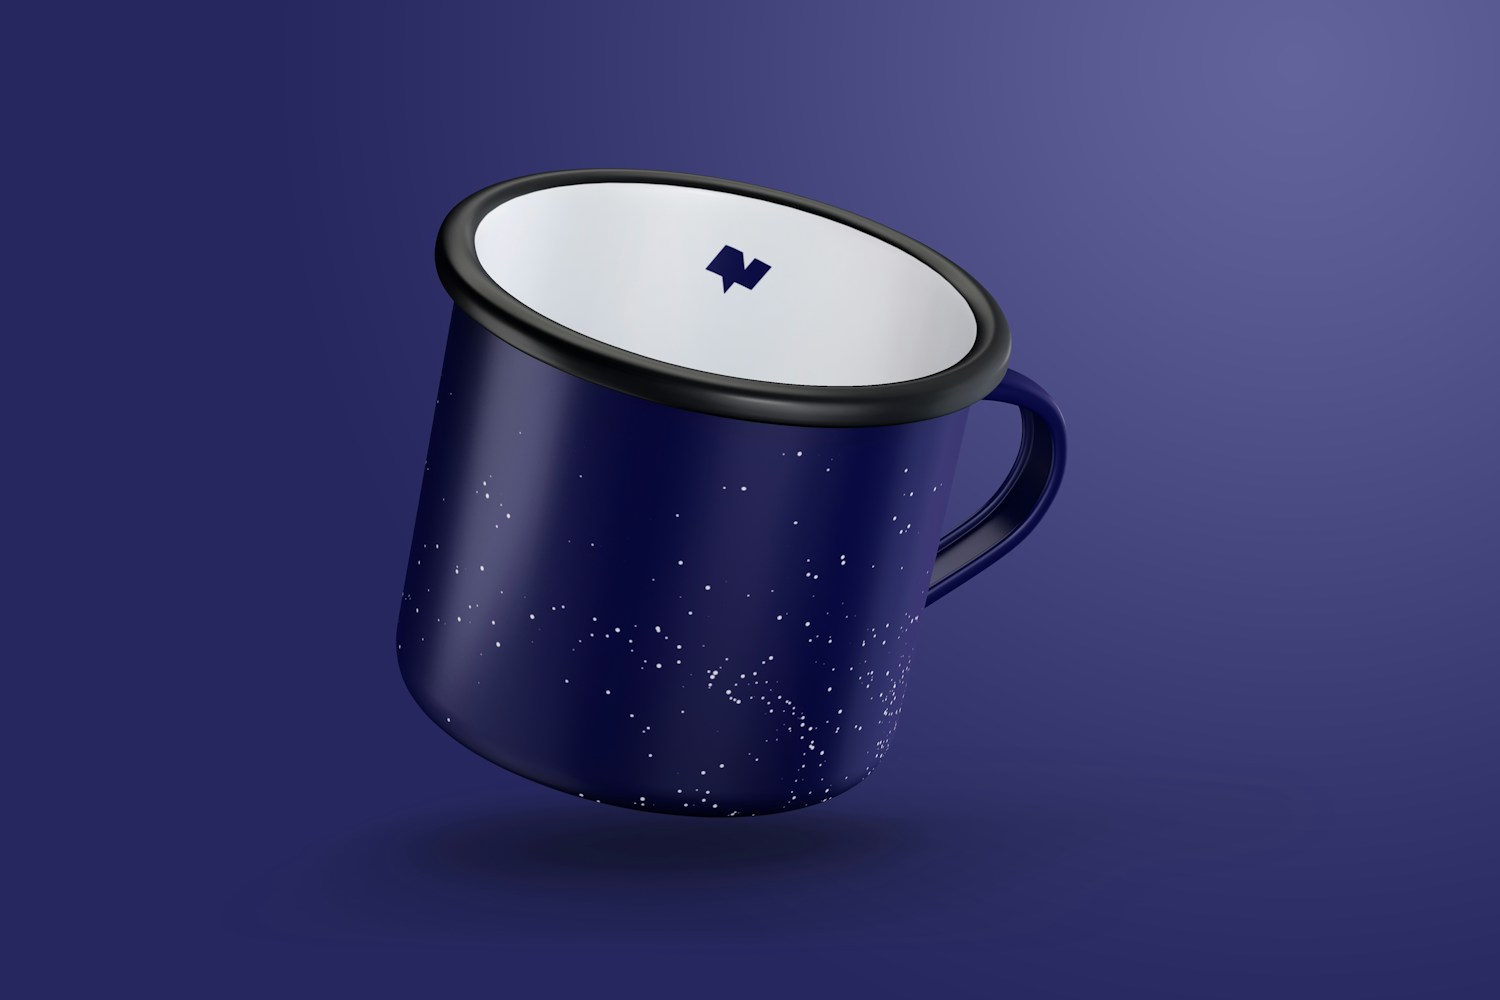 You can add details inside the mug.